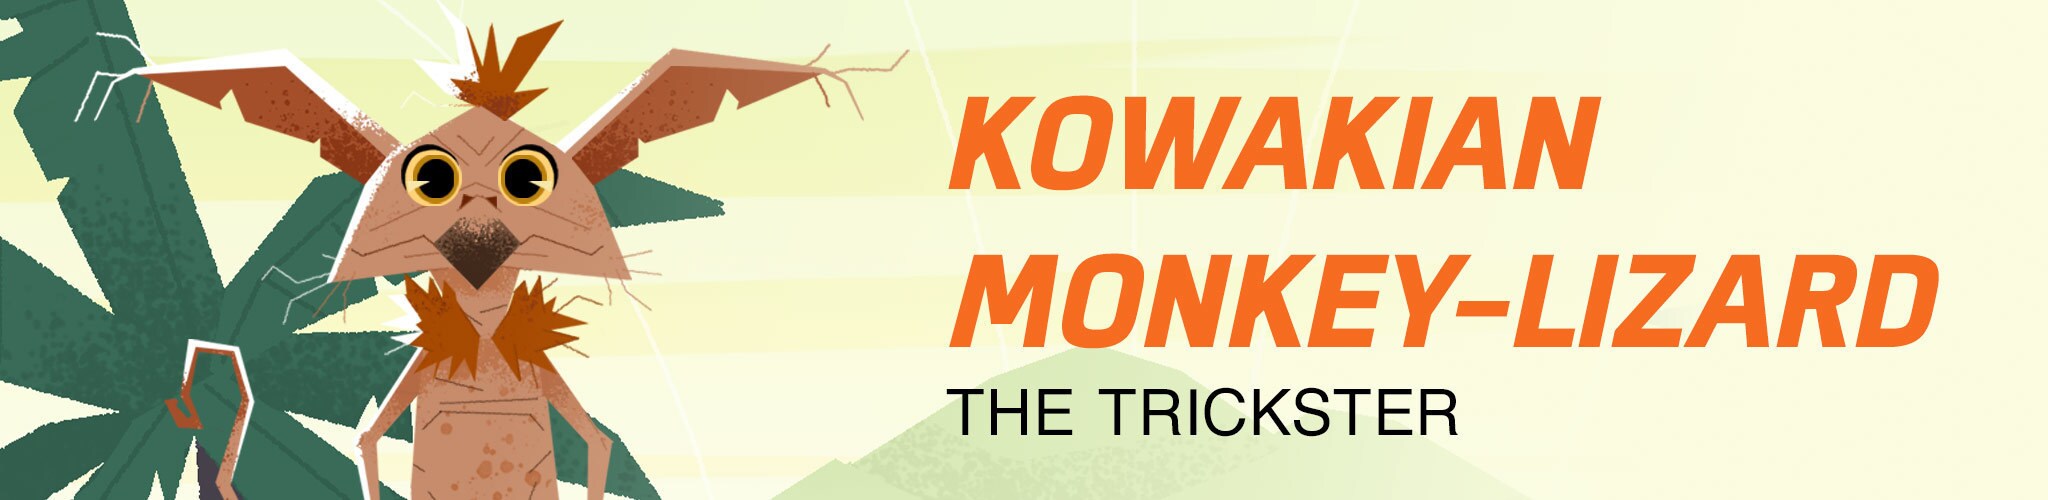 Galaxy of Creatures - Kowakian Monkey-Lizard